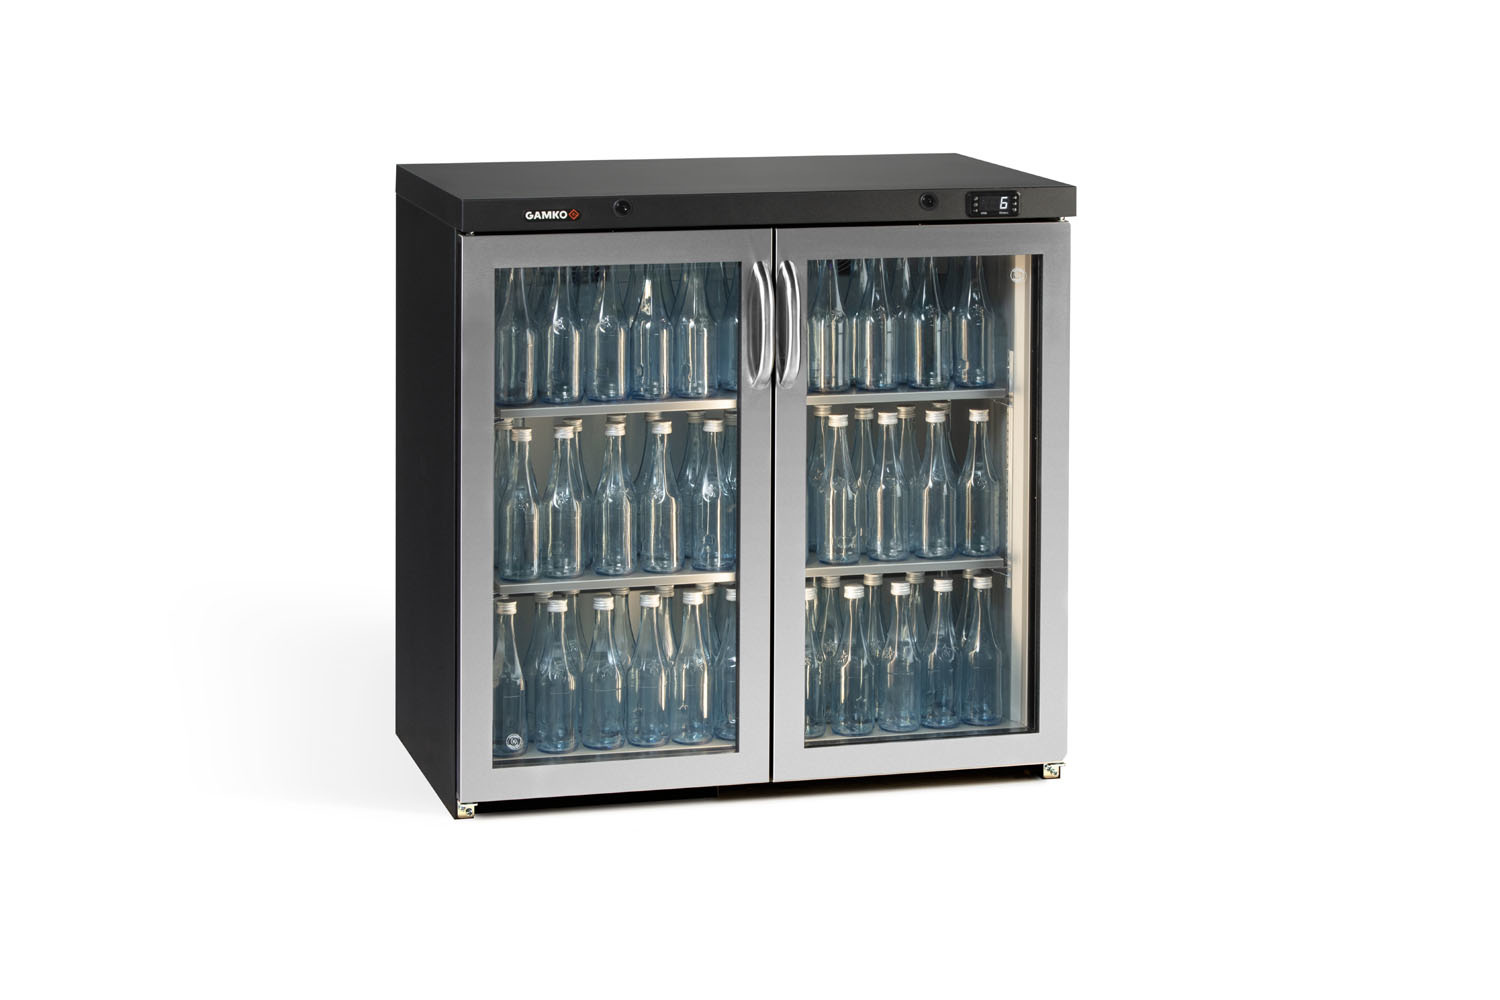 Flaschenkühlung 2-türig | Chrom | Gamko LG3/250GCS Maxiglass | 250L | Schwingtüren | 900x576x850mm